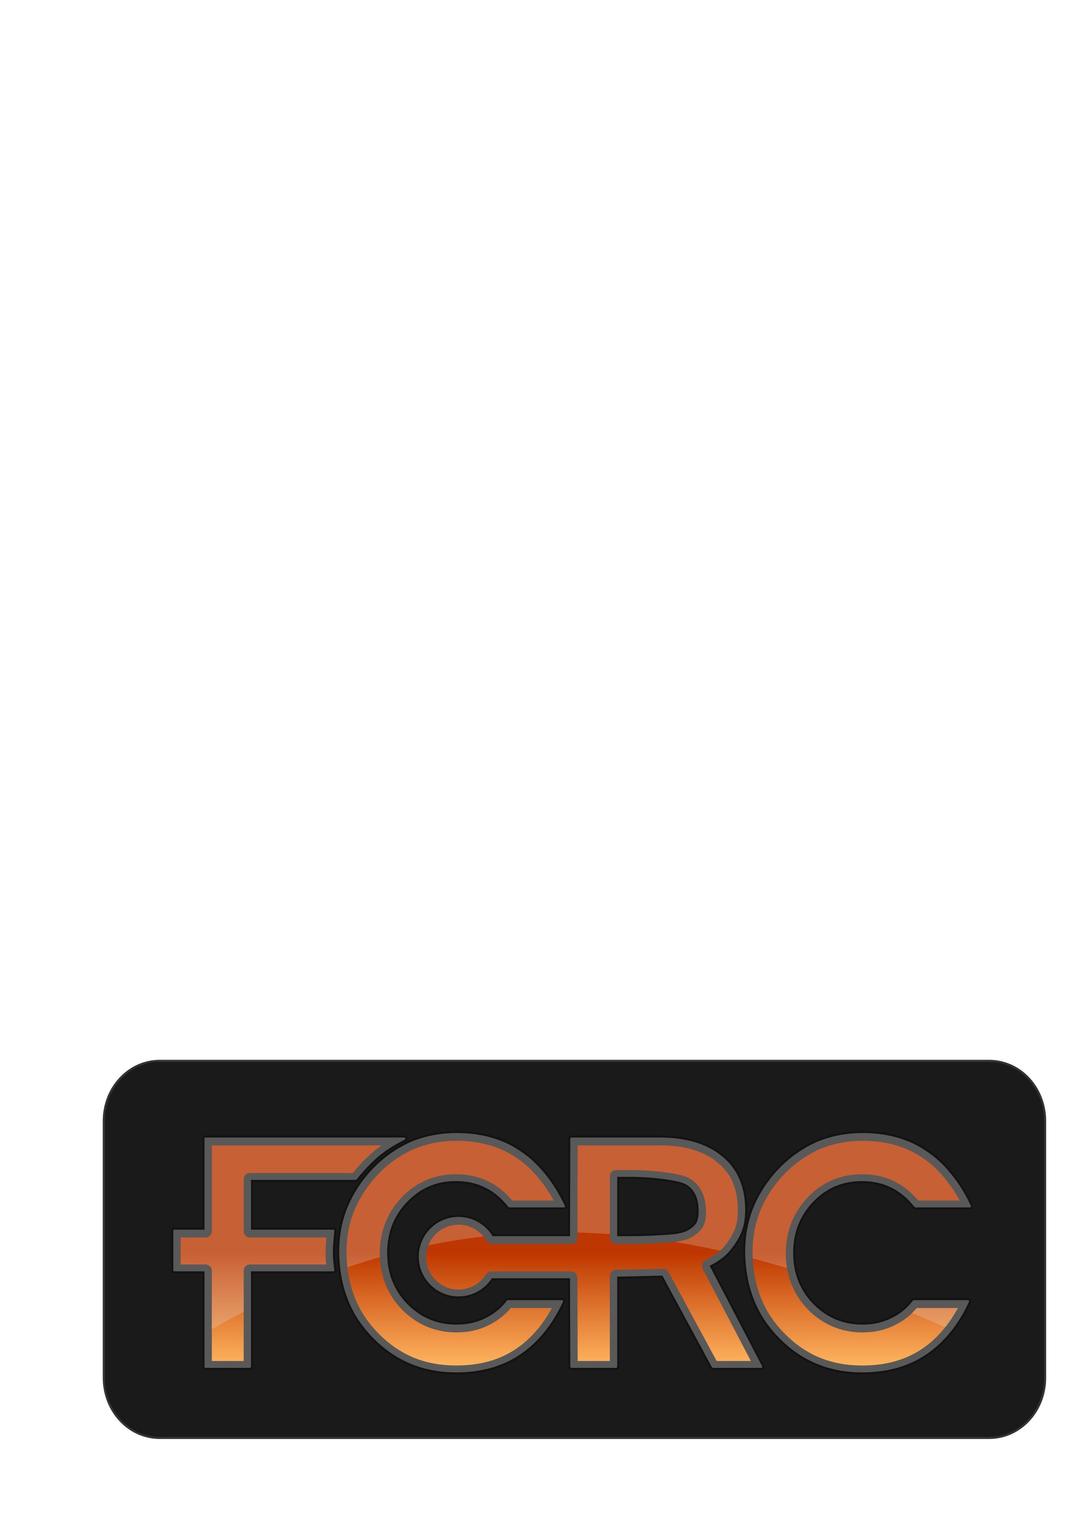 FCRC logo text 2 png transparent